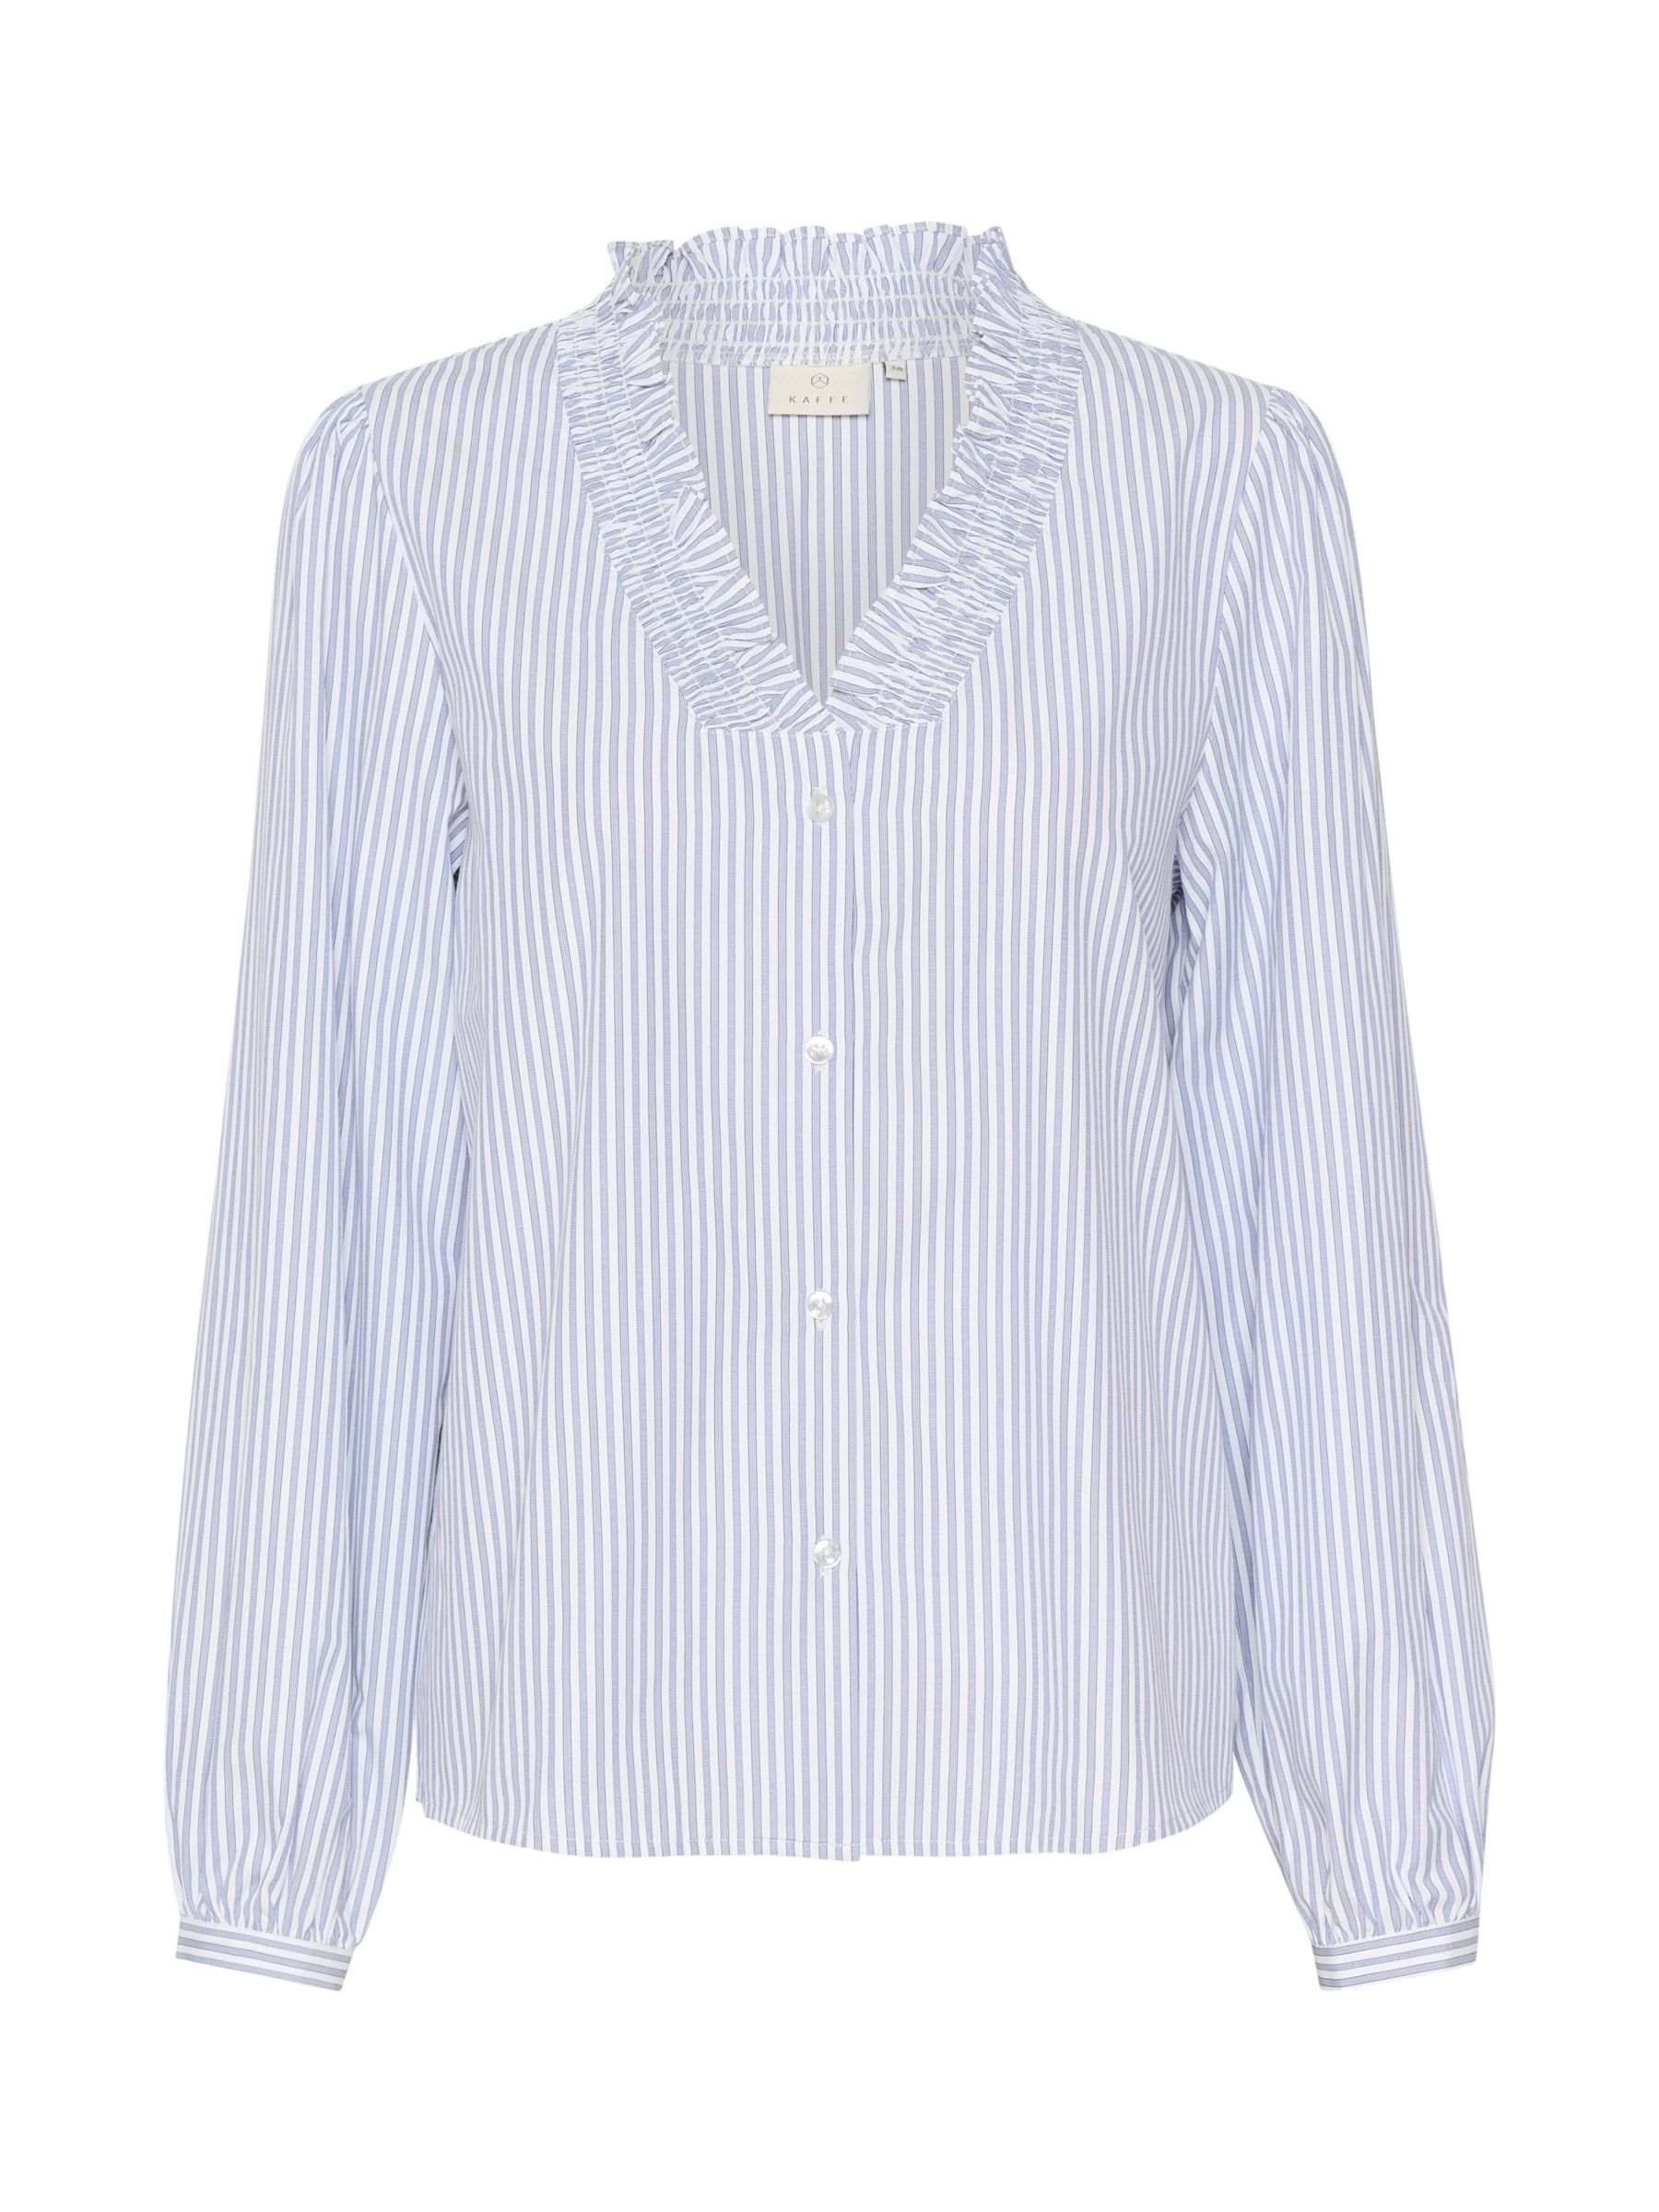 KAFFE Maibritt V-Neck Frill Shirt, Blue/White at John Lewis & Partners